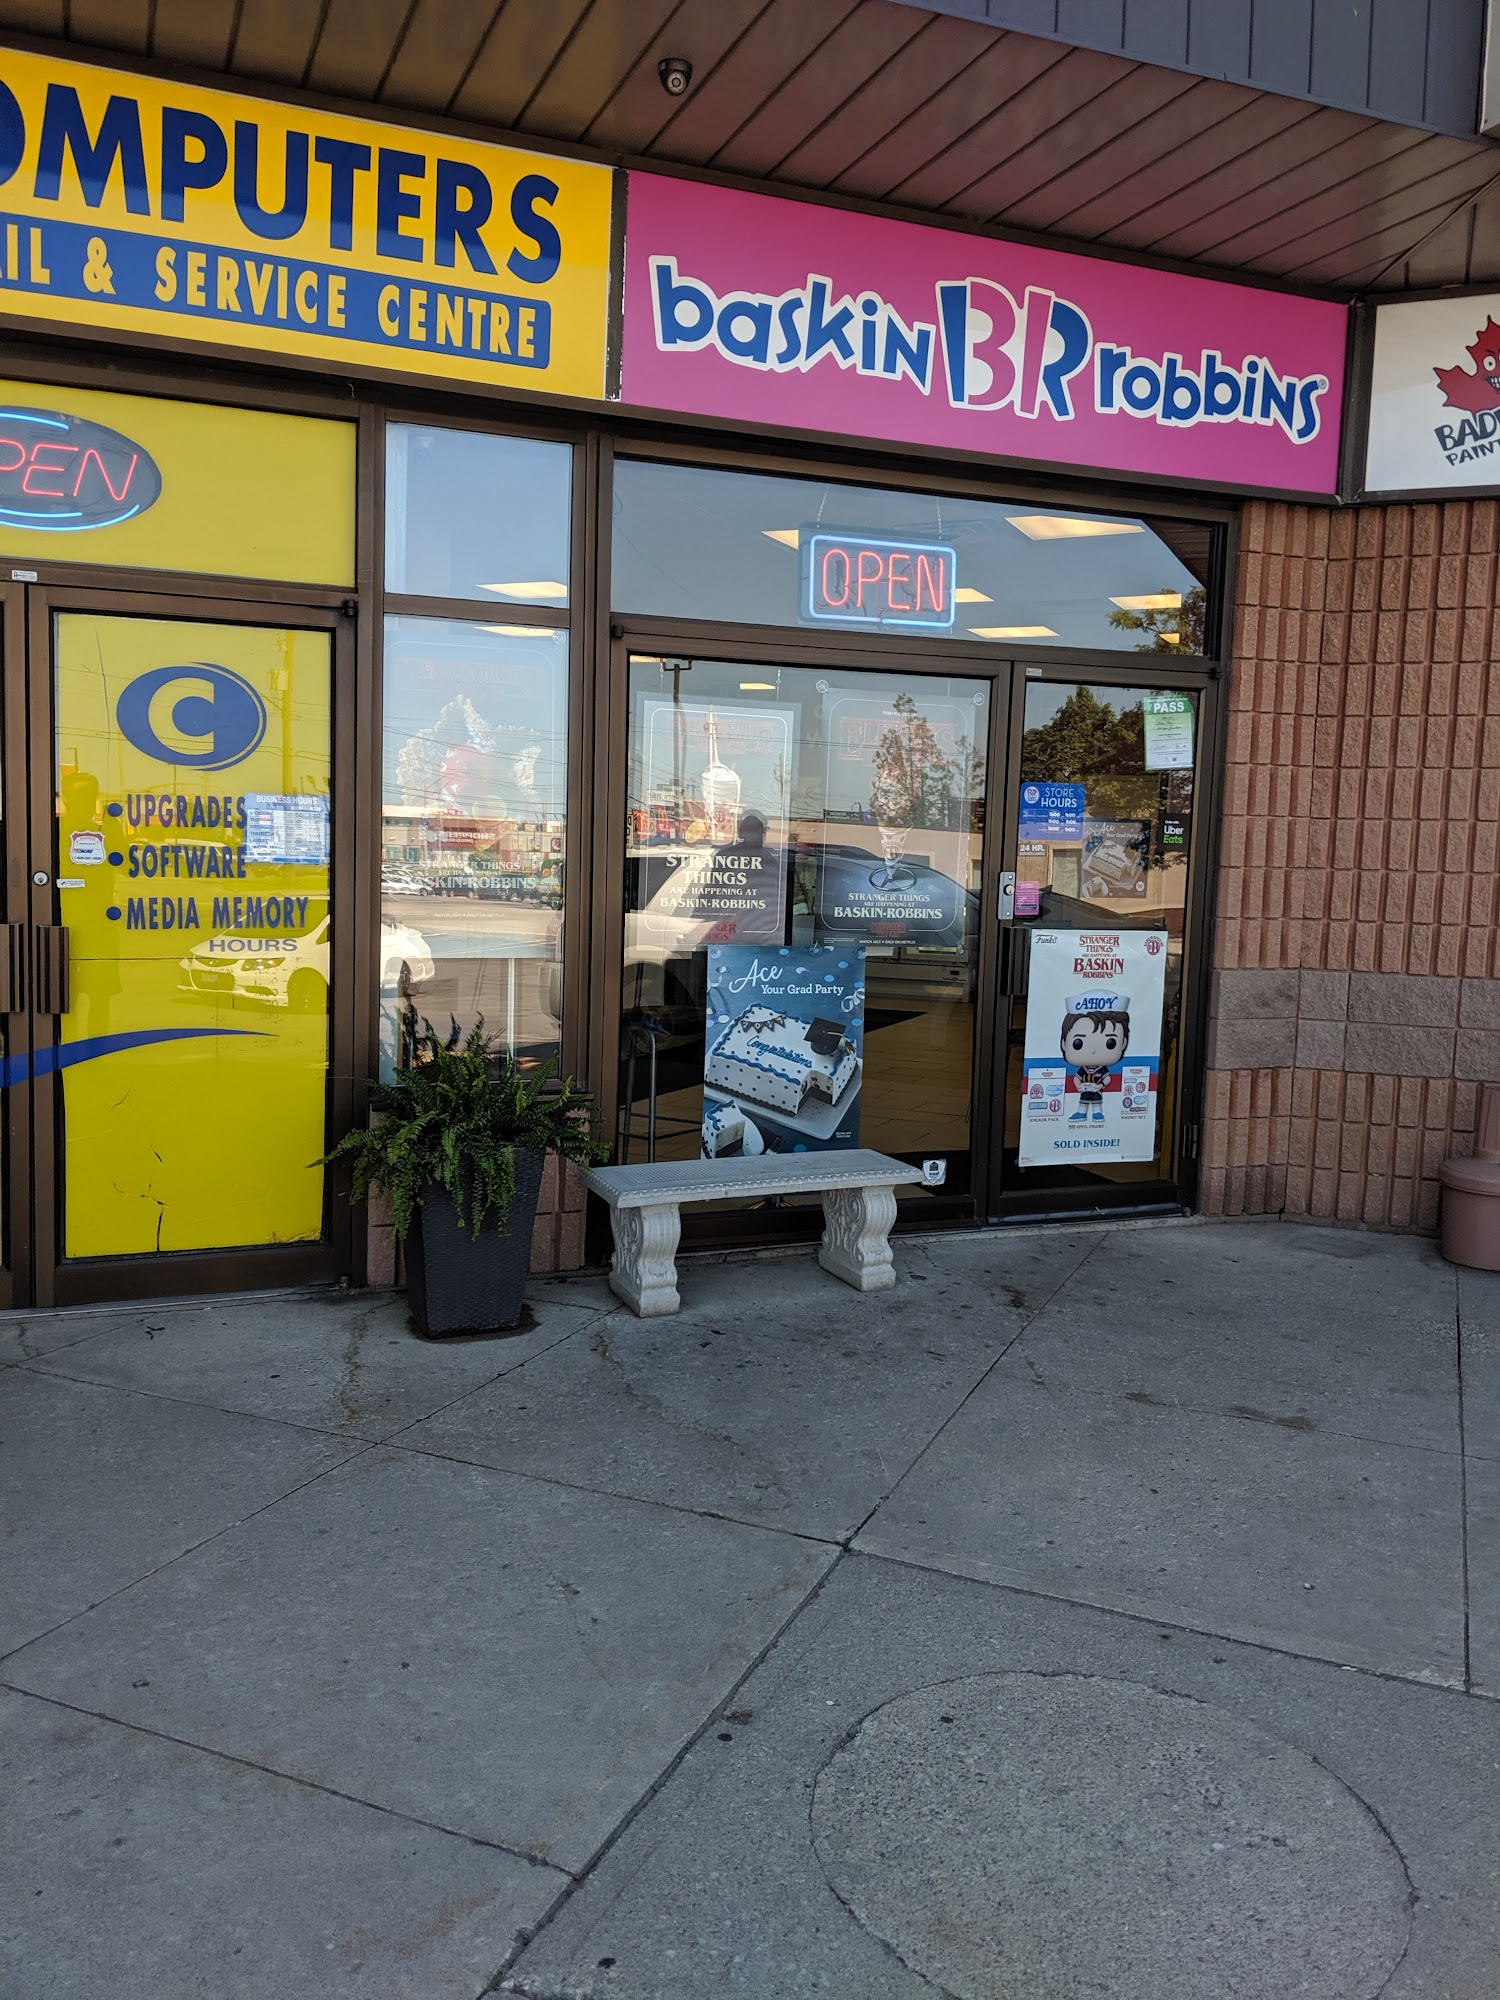 Baskin Robbins Ice cream & Cakes